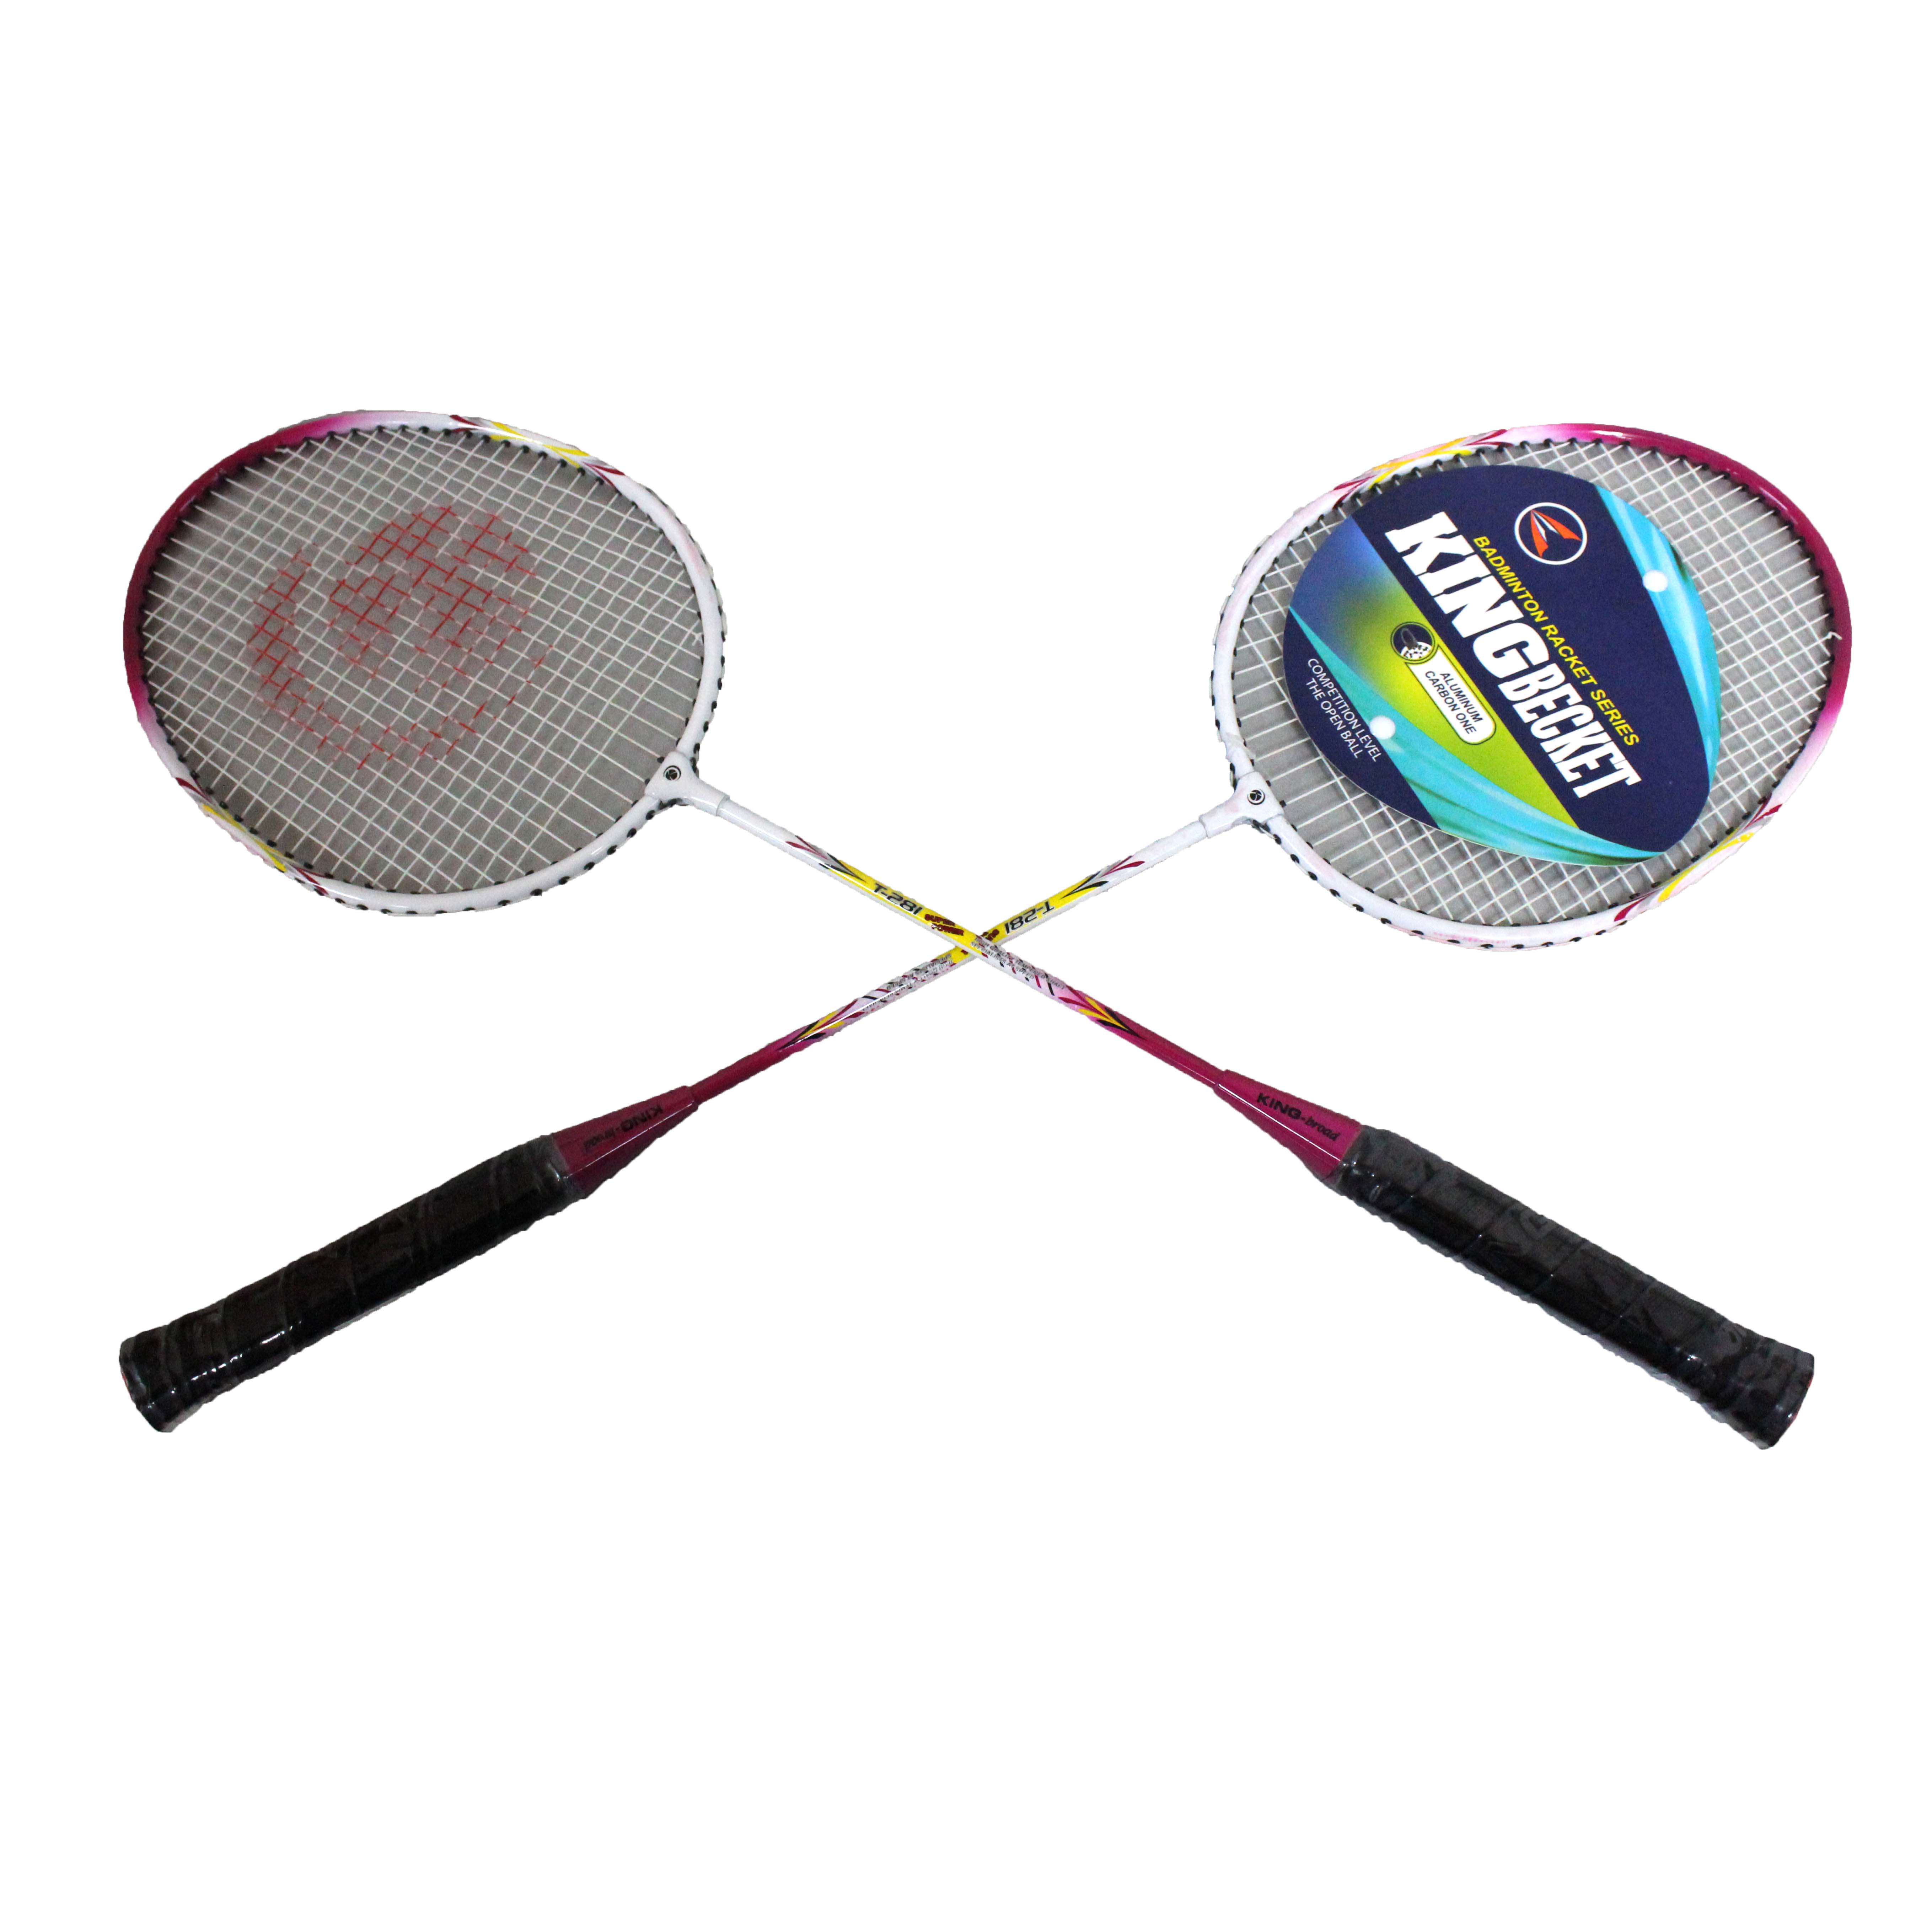 Badminton 2 Player Set (SG-102)